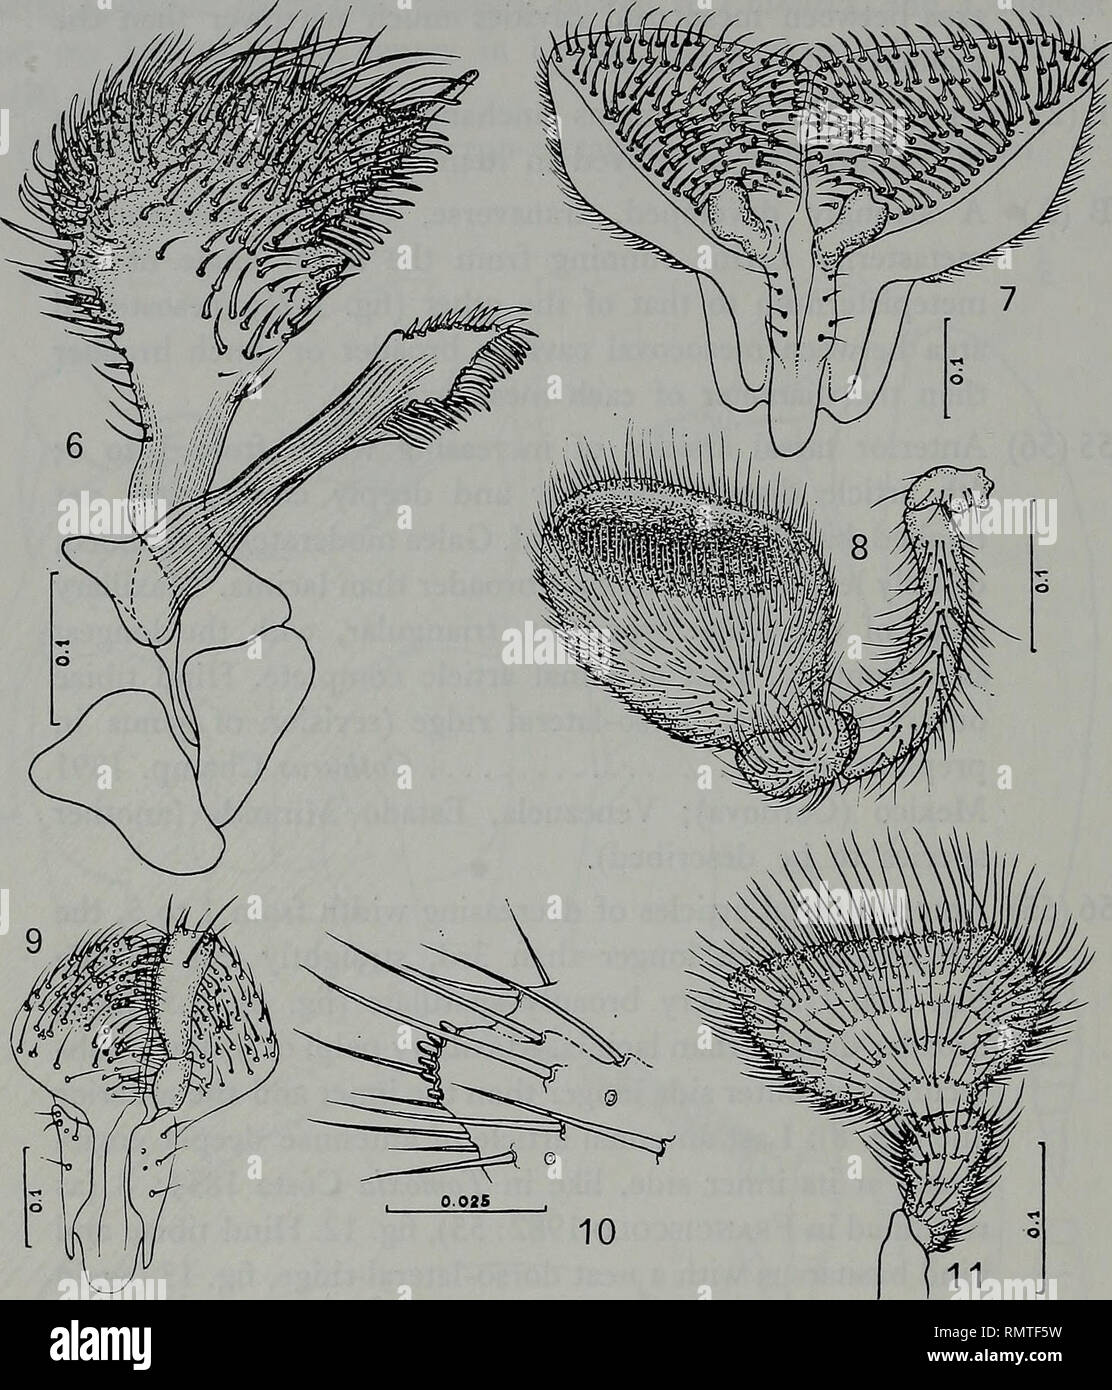 . Annali del Museo civico di storia naturale Giacomo Doria. Natural history. 84 M.E. FRANCISCOLO. Fig. 6-11 - Boatta albertae, ^ holotype: 6. left maxilla, dorsal side; 7. paraglossae, dorsal side; 8. left maxillary palpus, dorsally; 9. paraglosse of Mordella aculeata L. for comparison with fig. 7; 10. inner angle of 3rd article of labial palpus; 11. right labial palpus, dorsally. Description. (^) Dimensions: head 1.35 x 2.0 mm; pronotum 1.7x2.4; elytra 2.3x3.3; total length 5.35; pygidium 0.85x0.65. (^) I will omit description of those morphological aspects which are enough evident in the fig Stock Photo